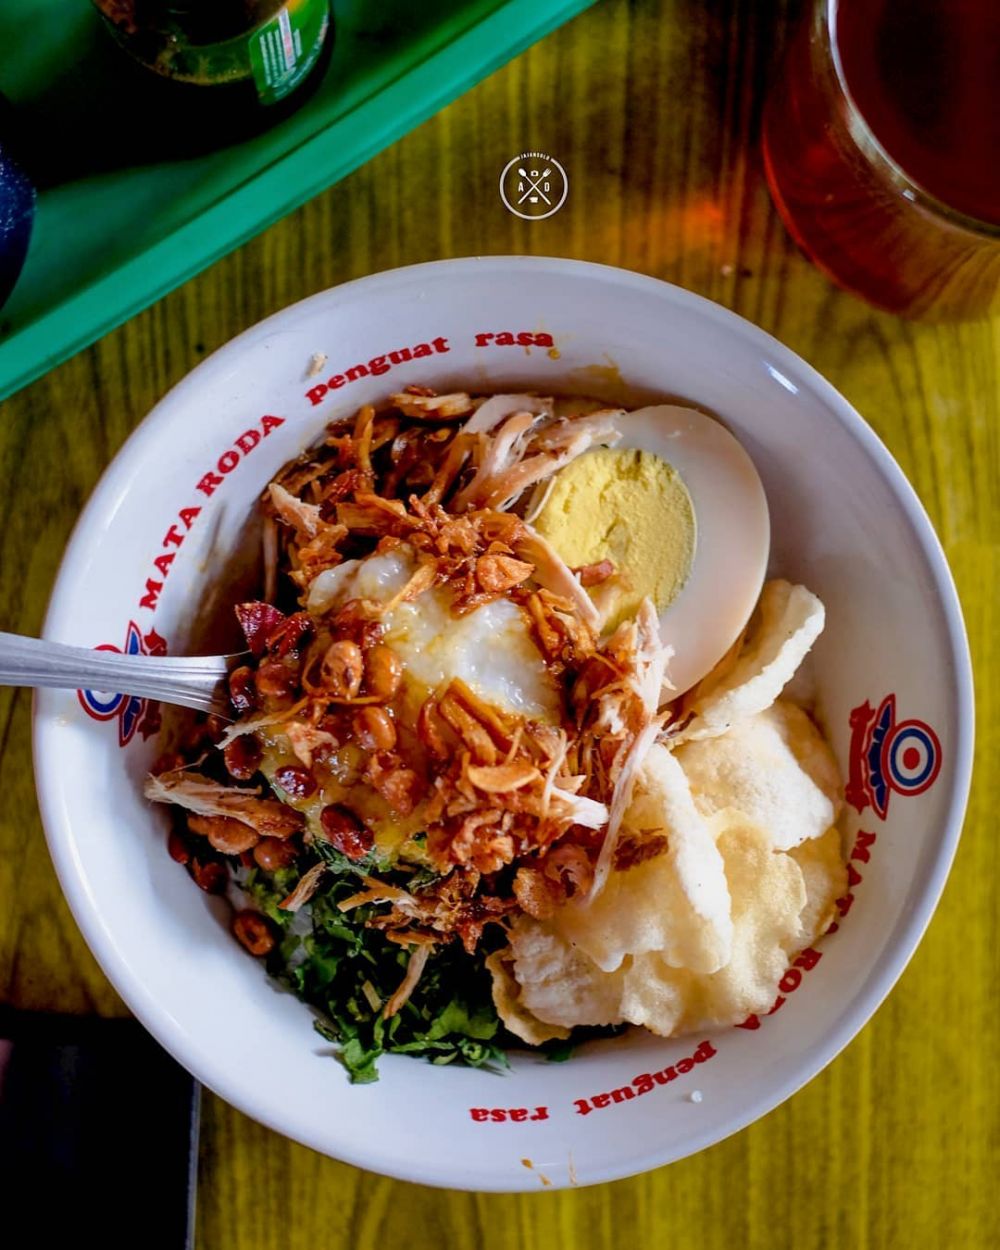 13 Resep makanan khas Bandung, populer, enak, dan mudah dibuat